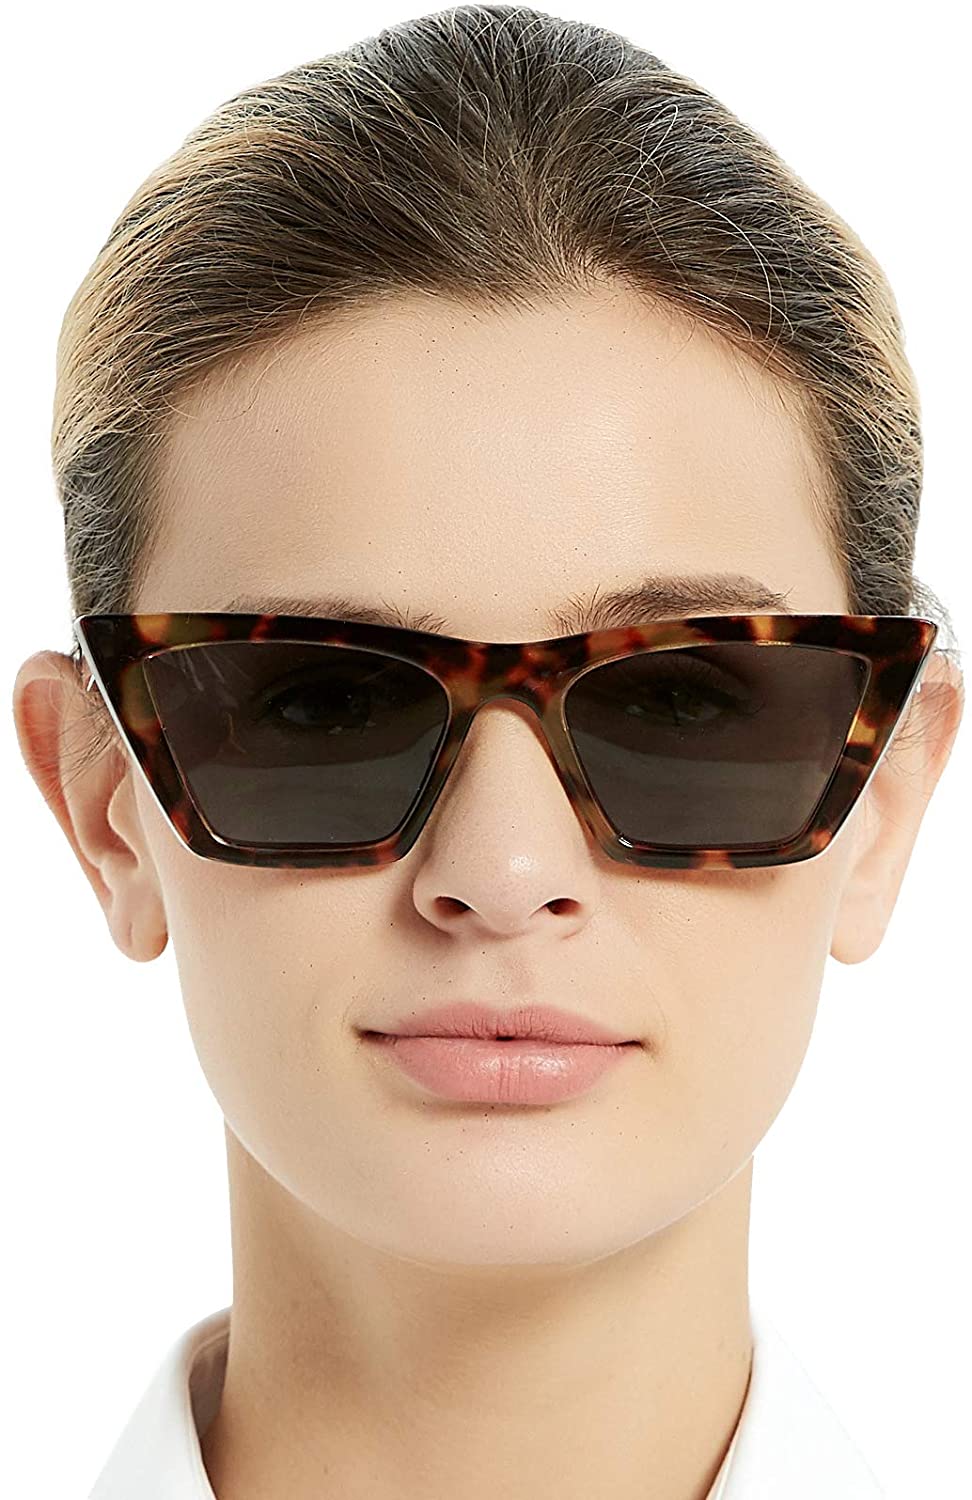 OCCI CHIARI Reading Glasses for Women Cat Eye Fashion Reader Sunglasses Brown